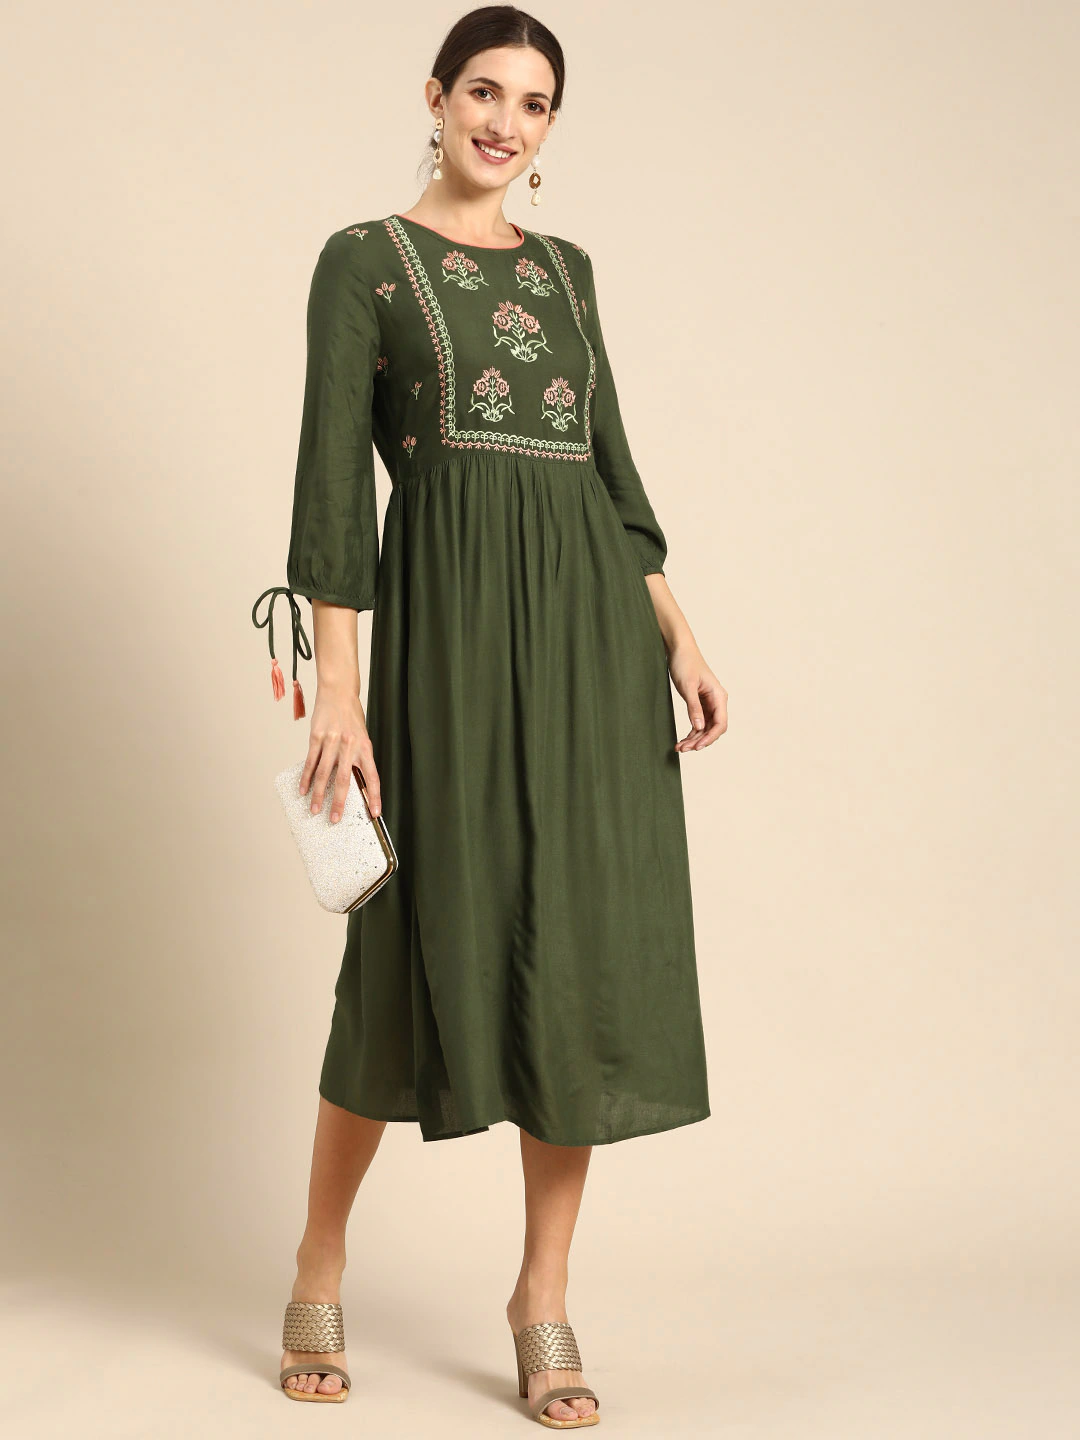 Green Ethnic Embroidered Ethnic Midi Dress